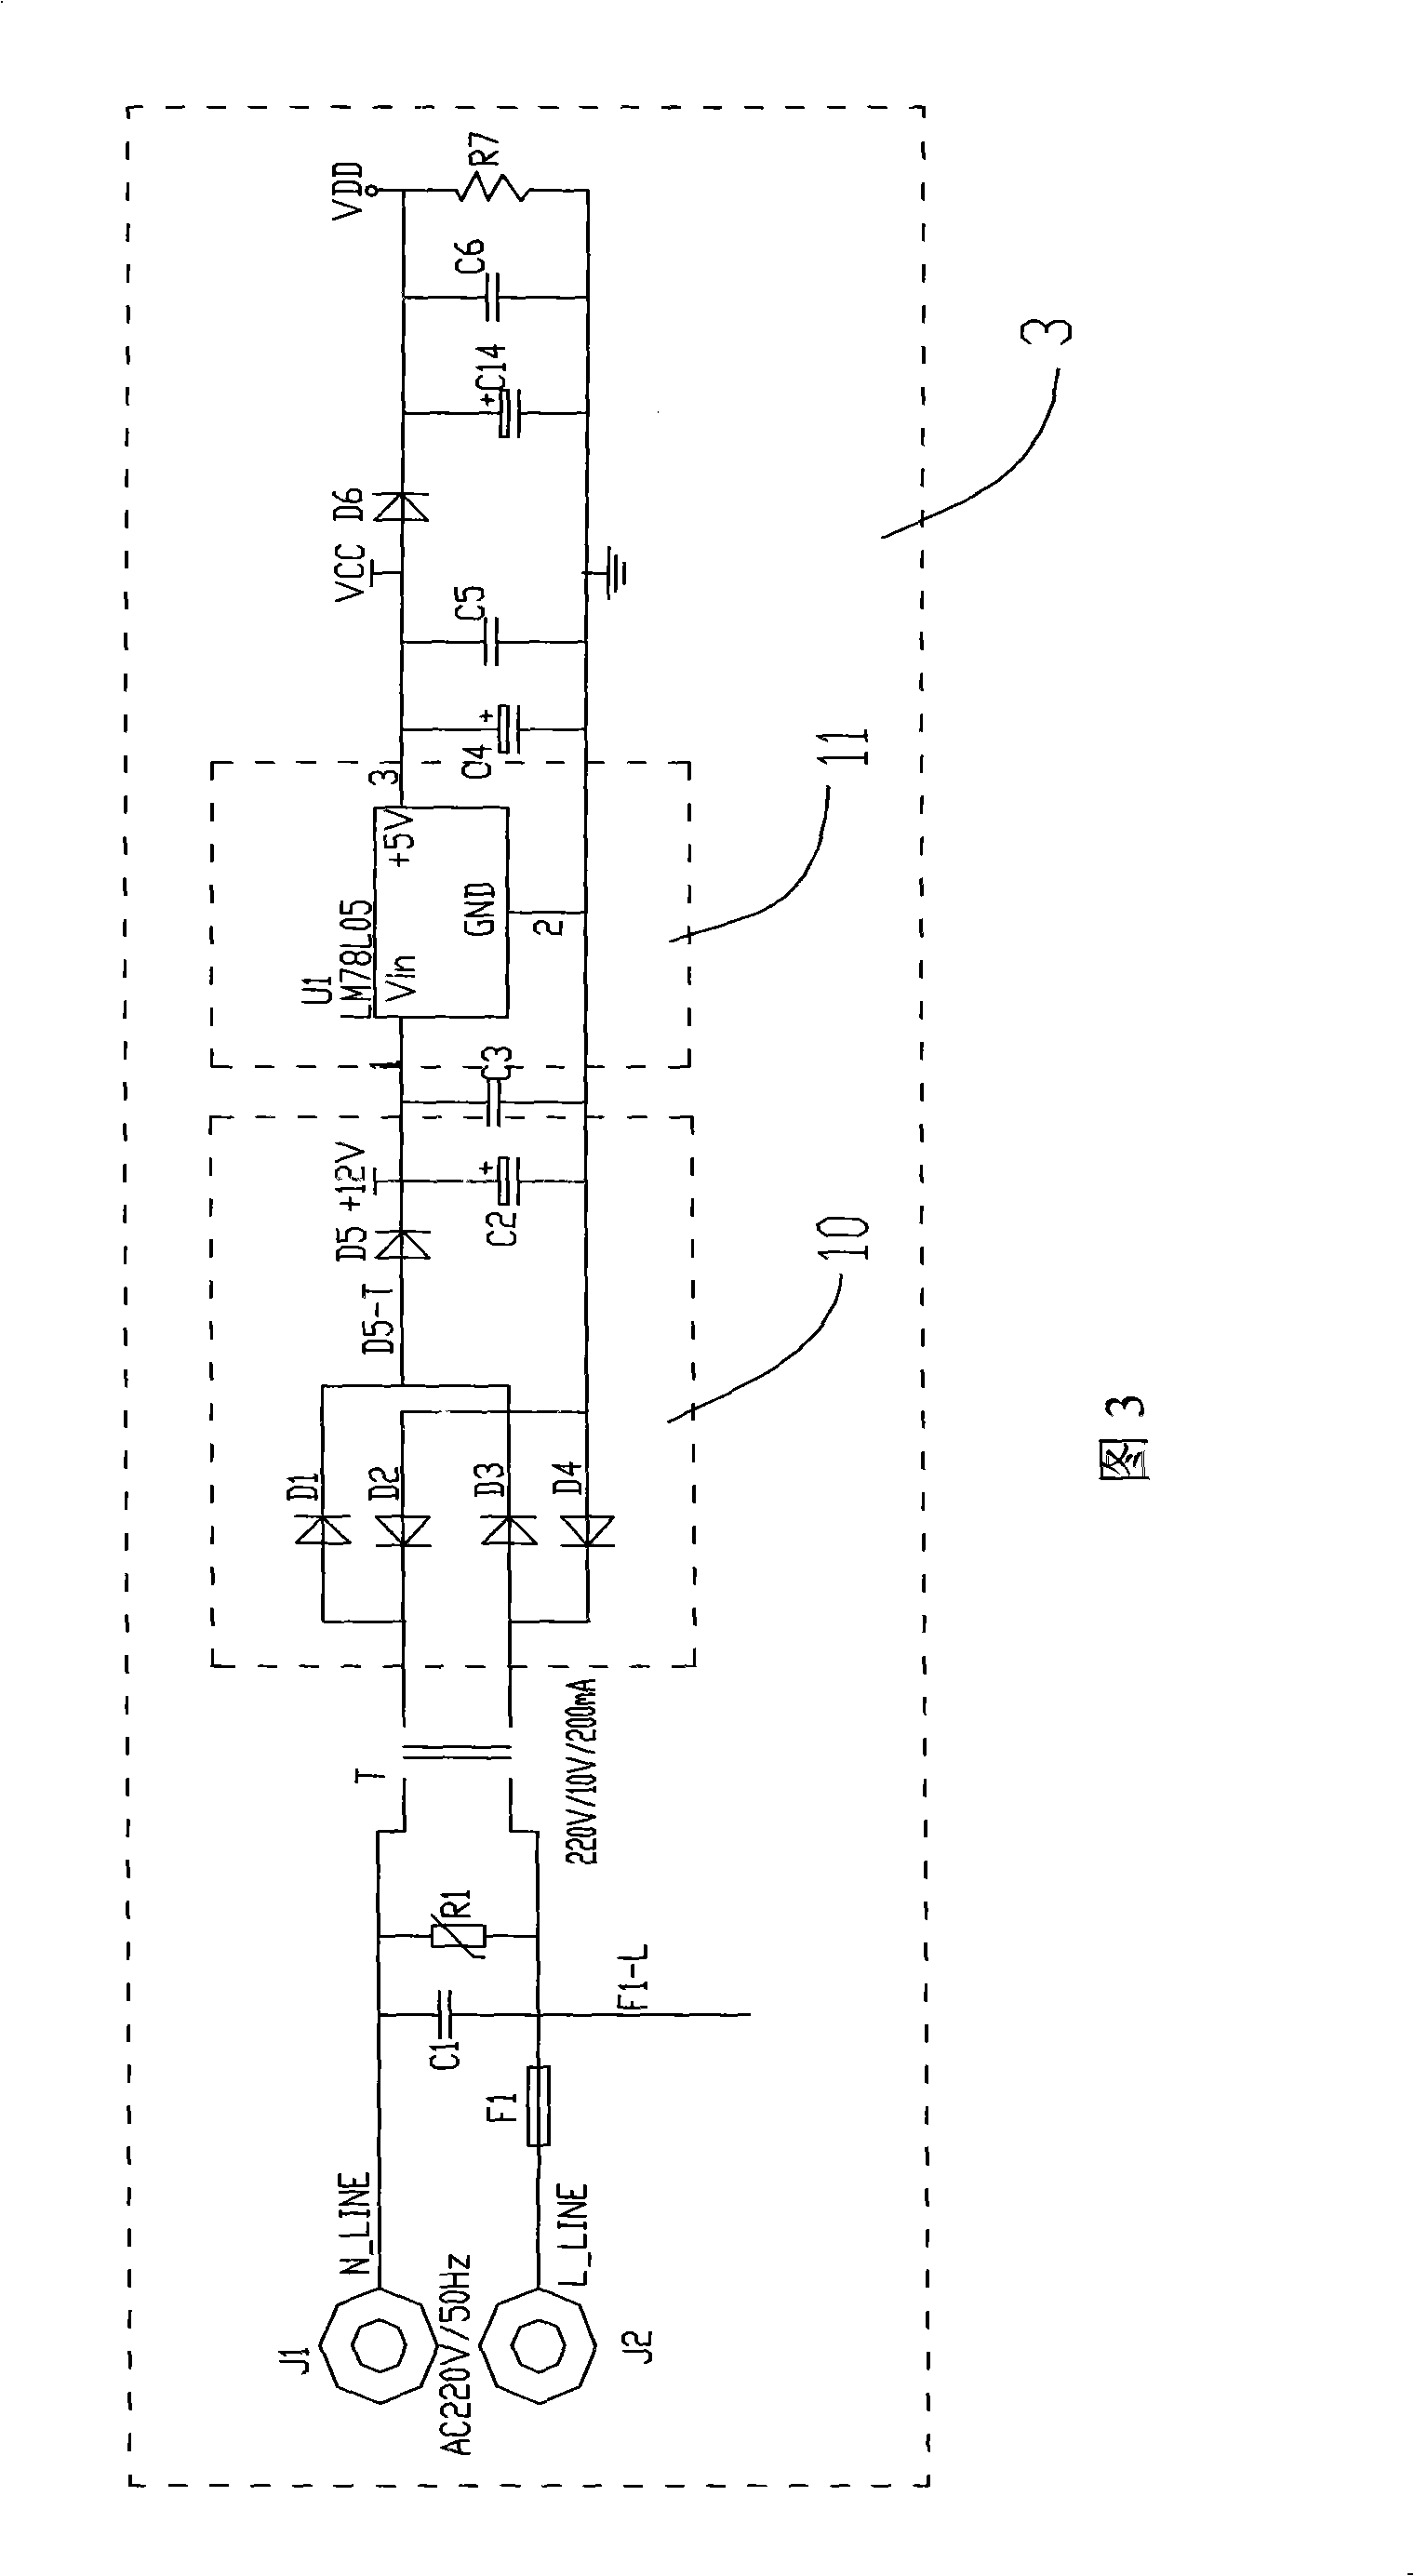 Circuit of pulping machine